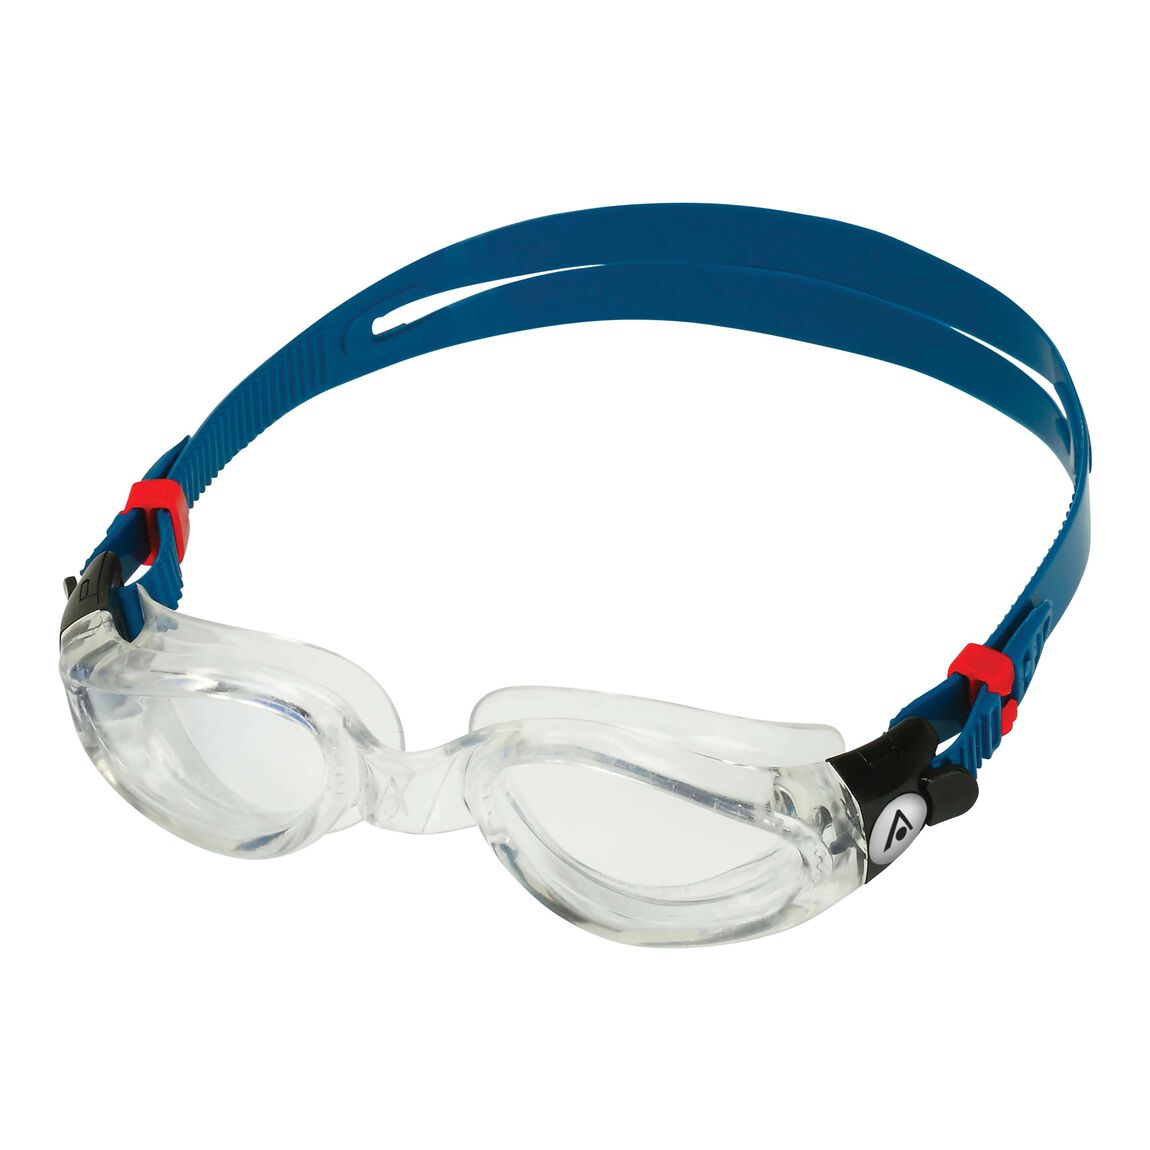 Aquasphere Kaiman Swim Goggles - Transparent/Petrol